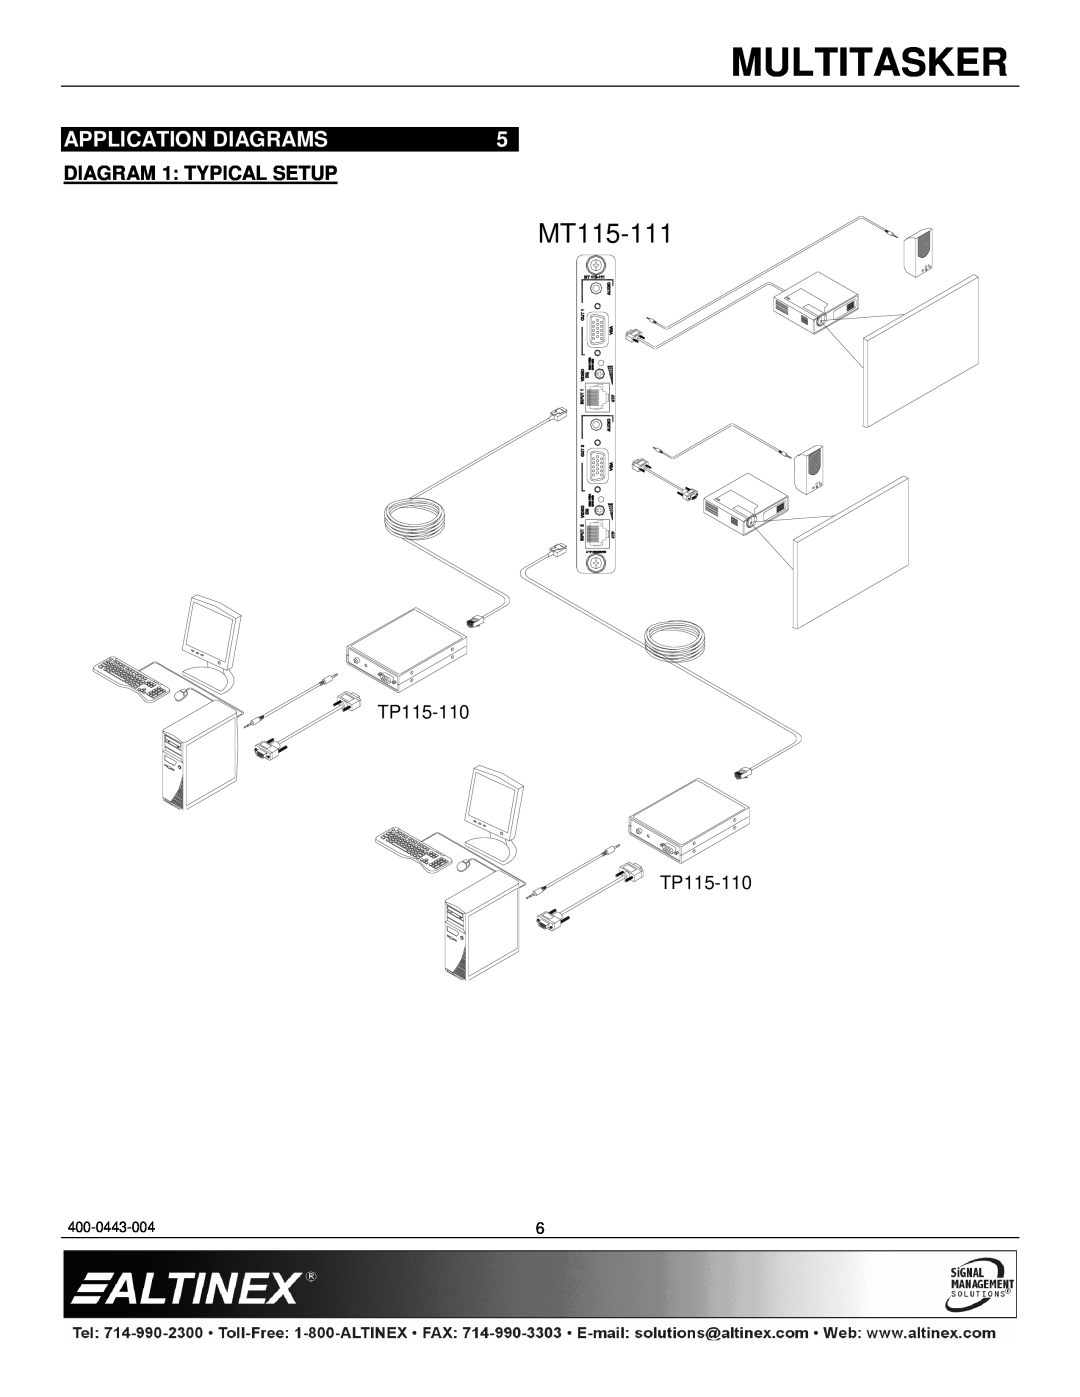 Altinex MT115-111 manual Application Diagrams, Multitasker 